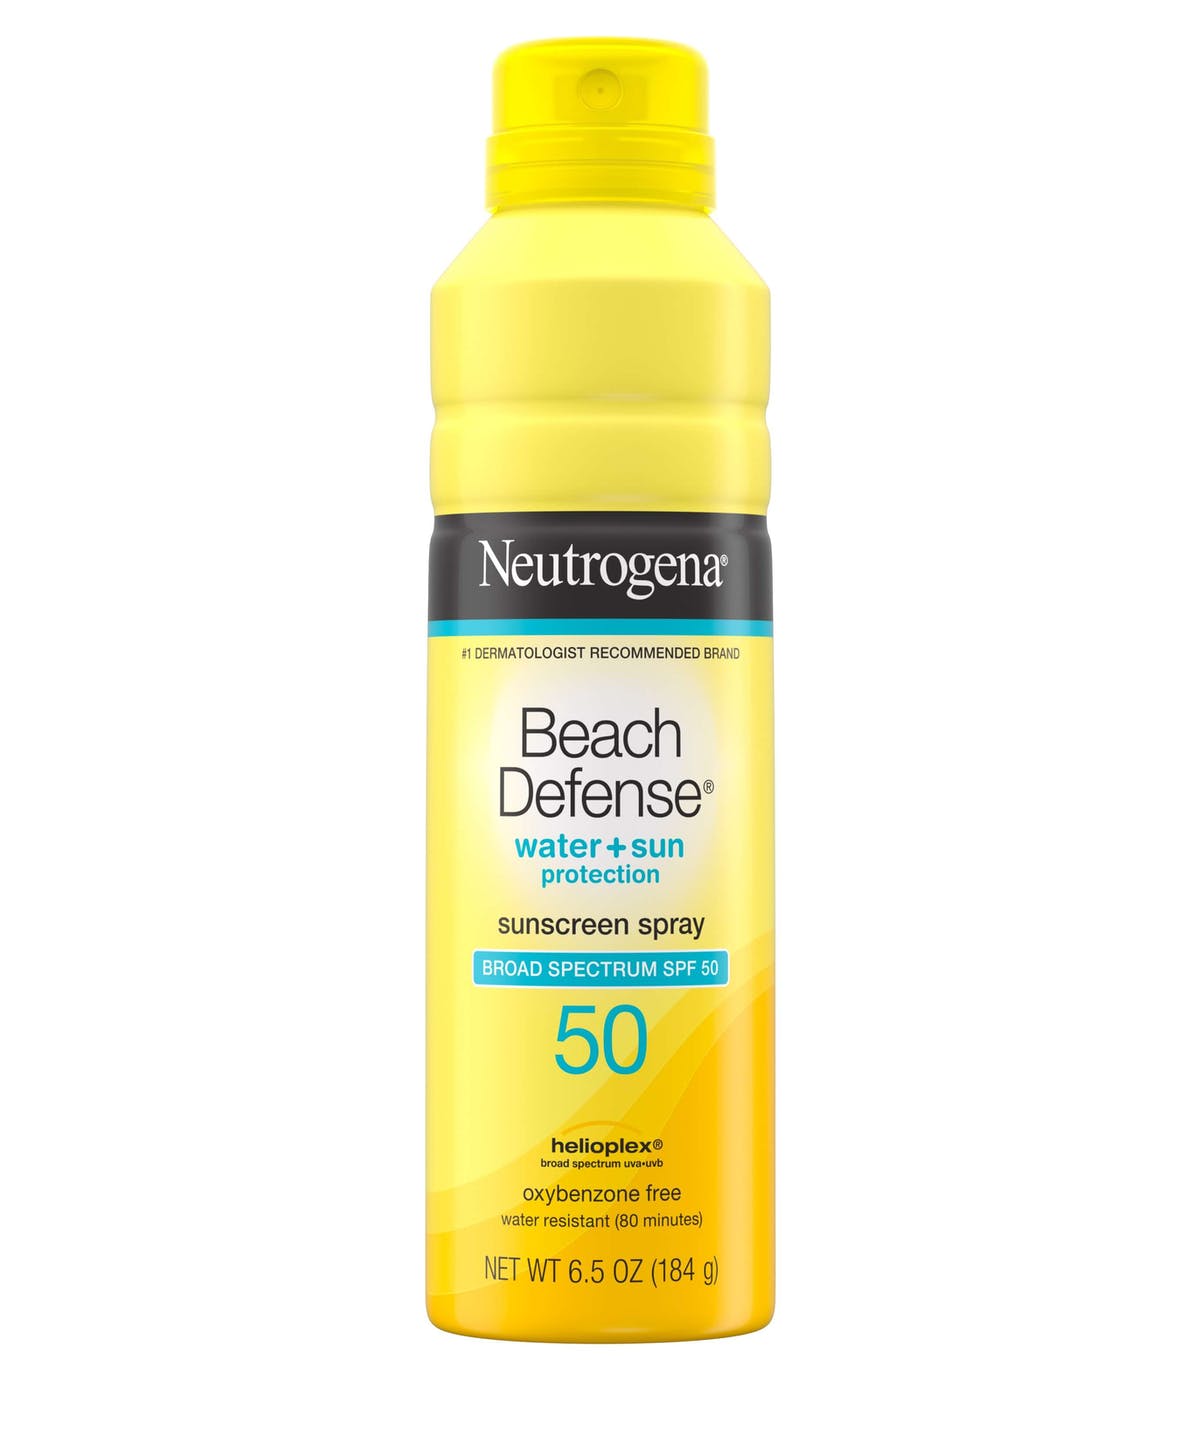 Neutrogena Beach Defense Water + Sun Protection Body Sunscreen Spray SPF 50, 6.5 oz. / 184 g